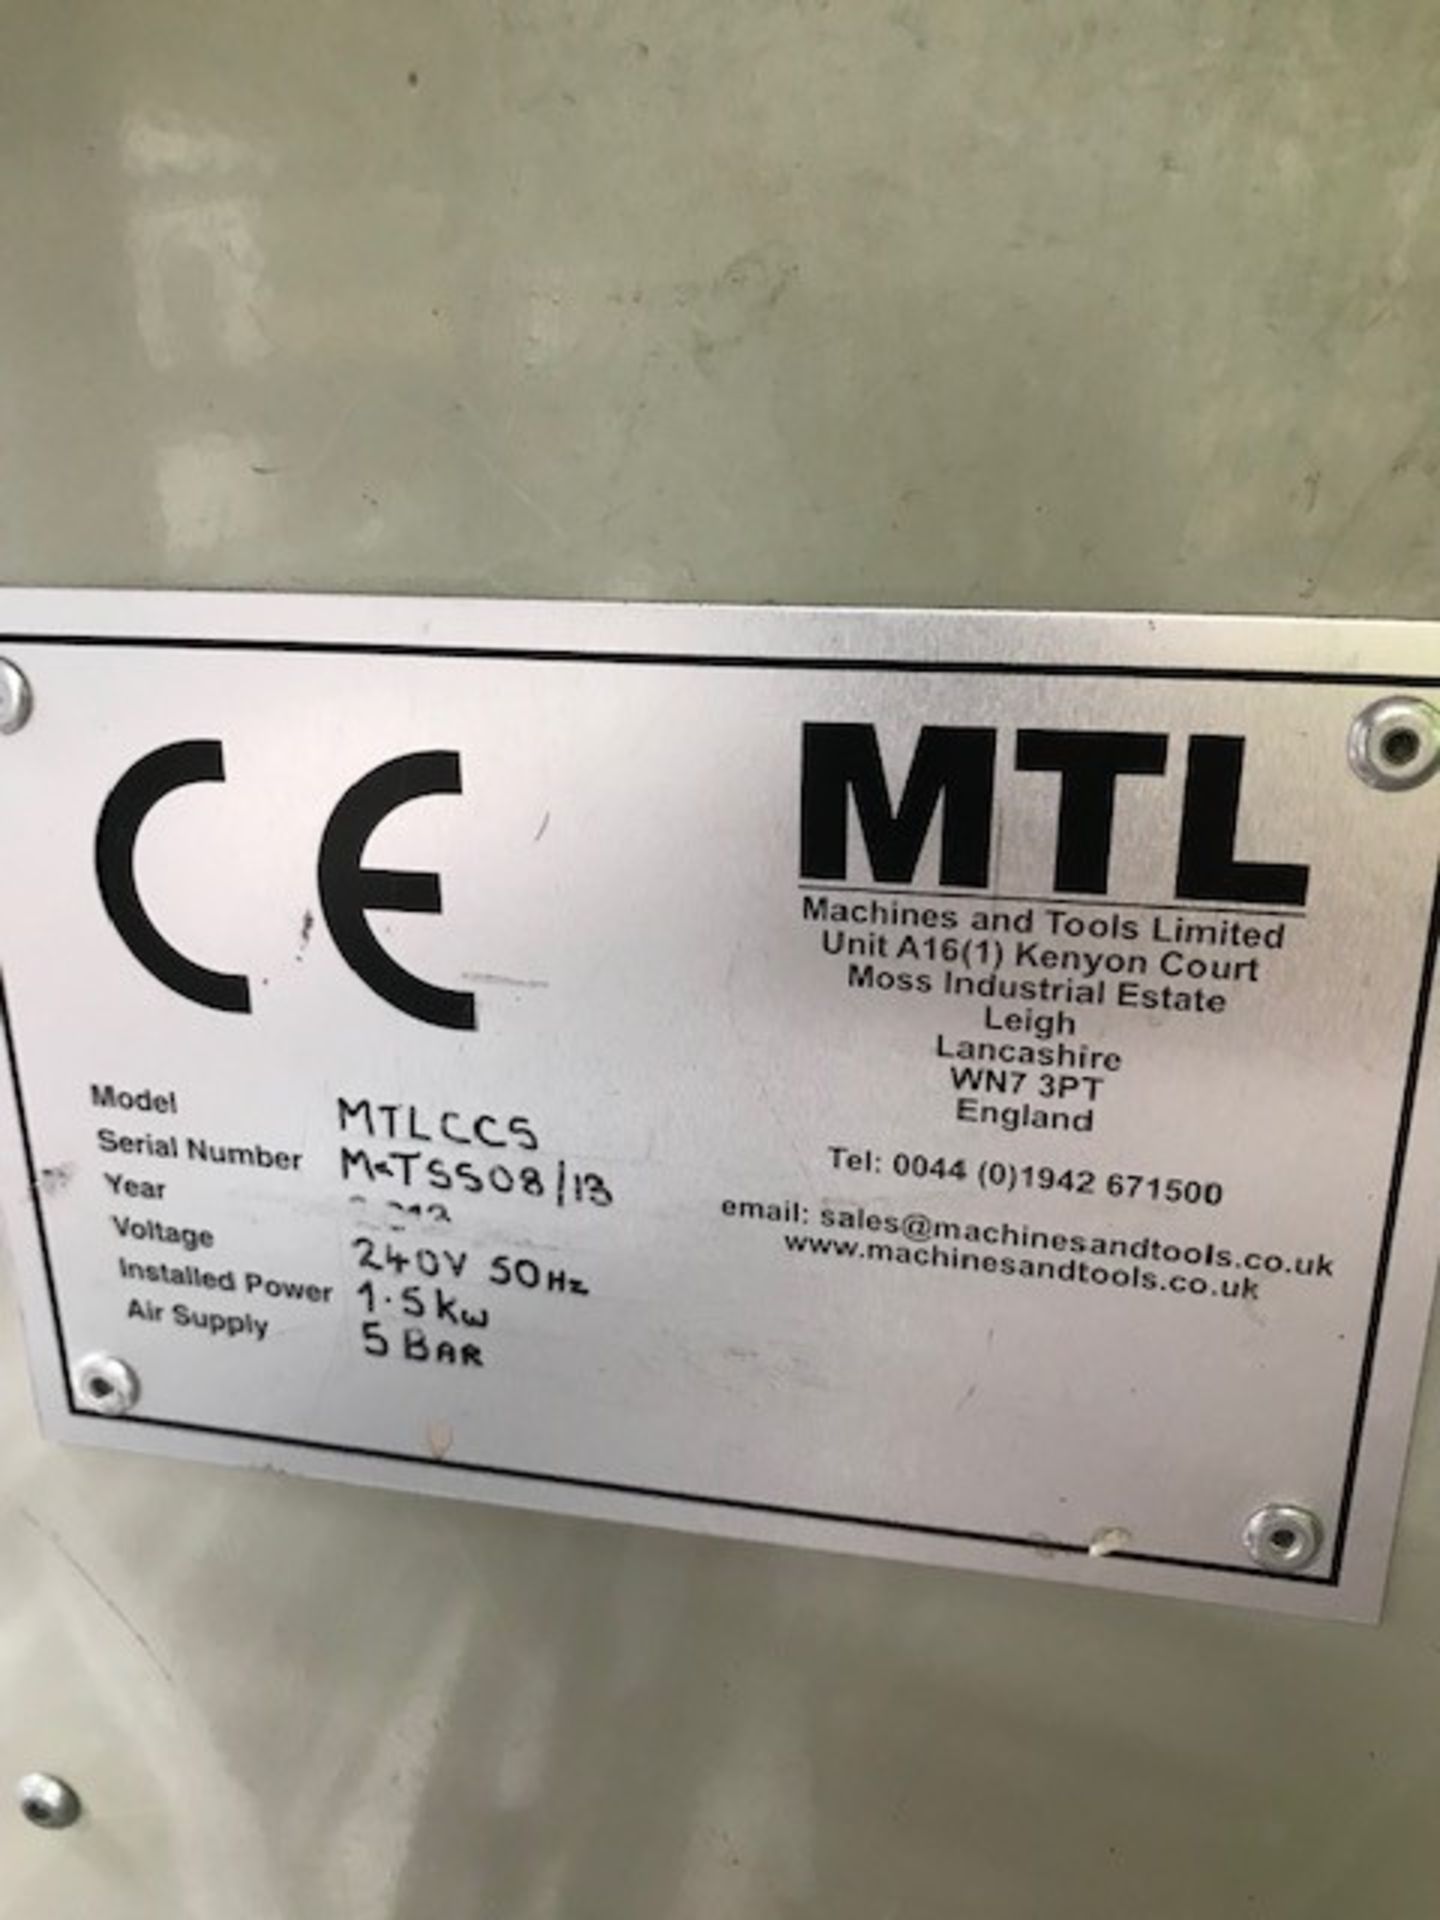 MTL (Machines & Tools Limited) model MTLCCS saw - Image 2 of 11